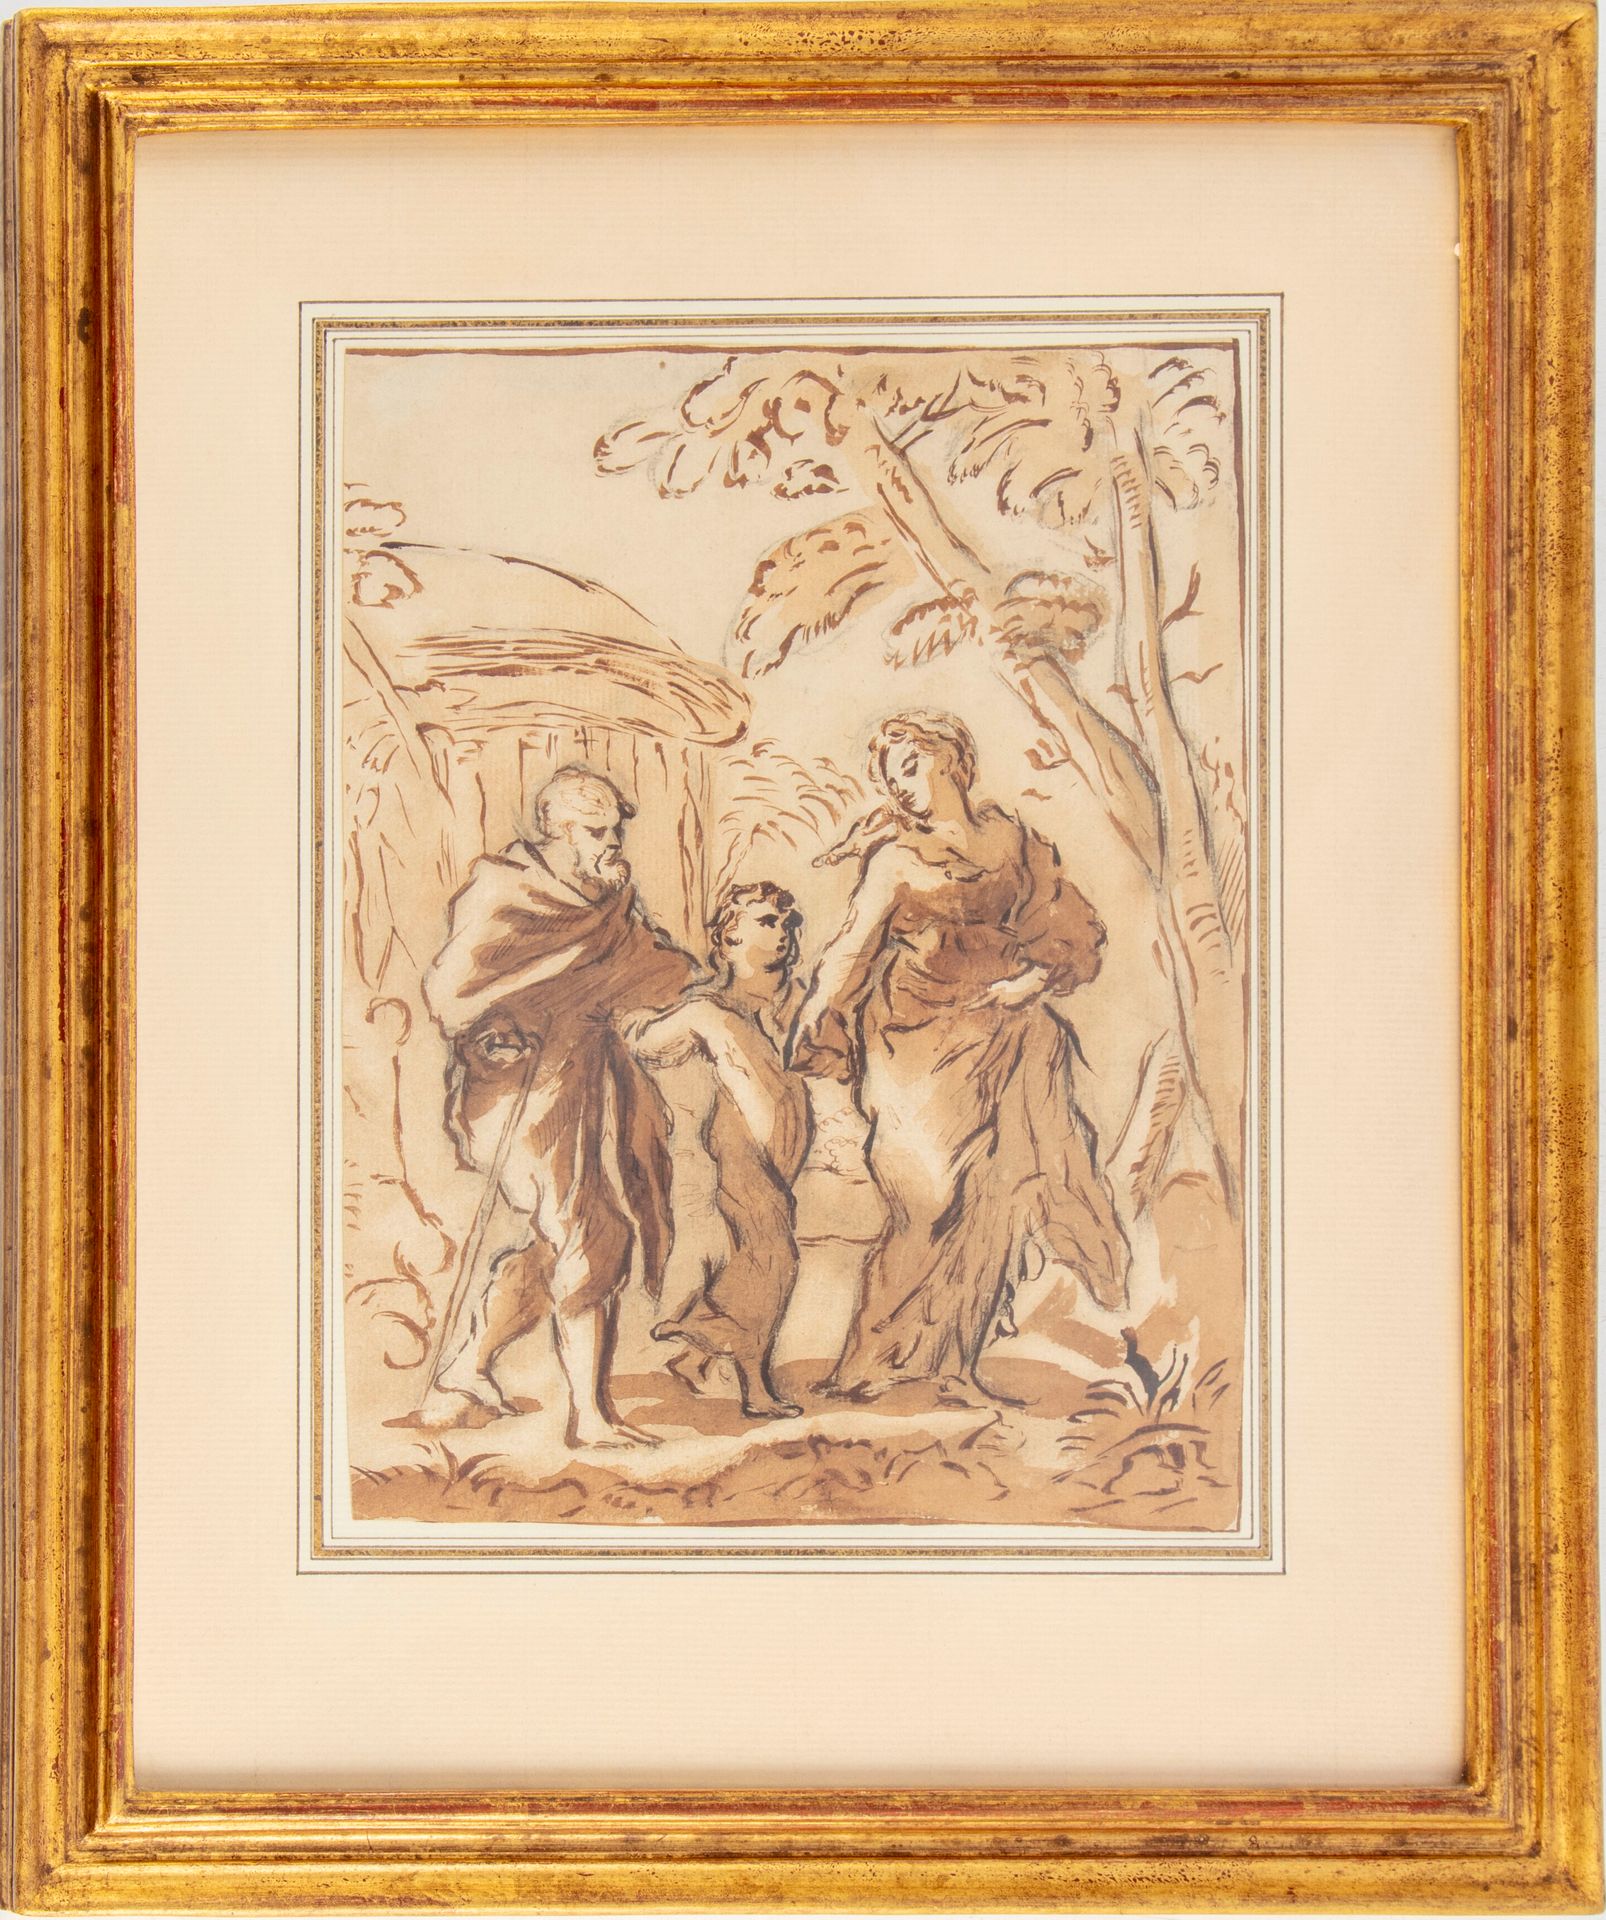 Null 18世纪法国学校

圣家族返回埃及

水墨画

22,5 x 17 cm